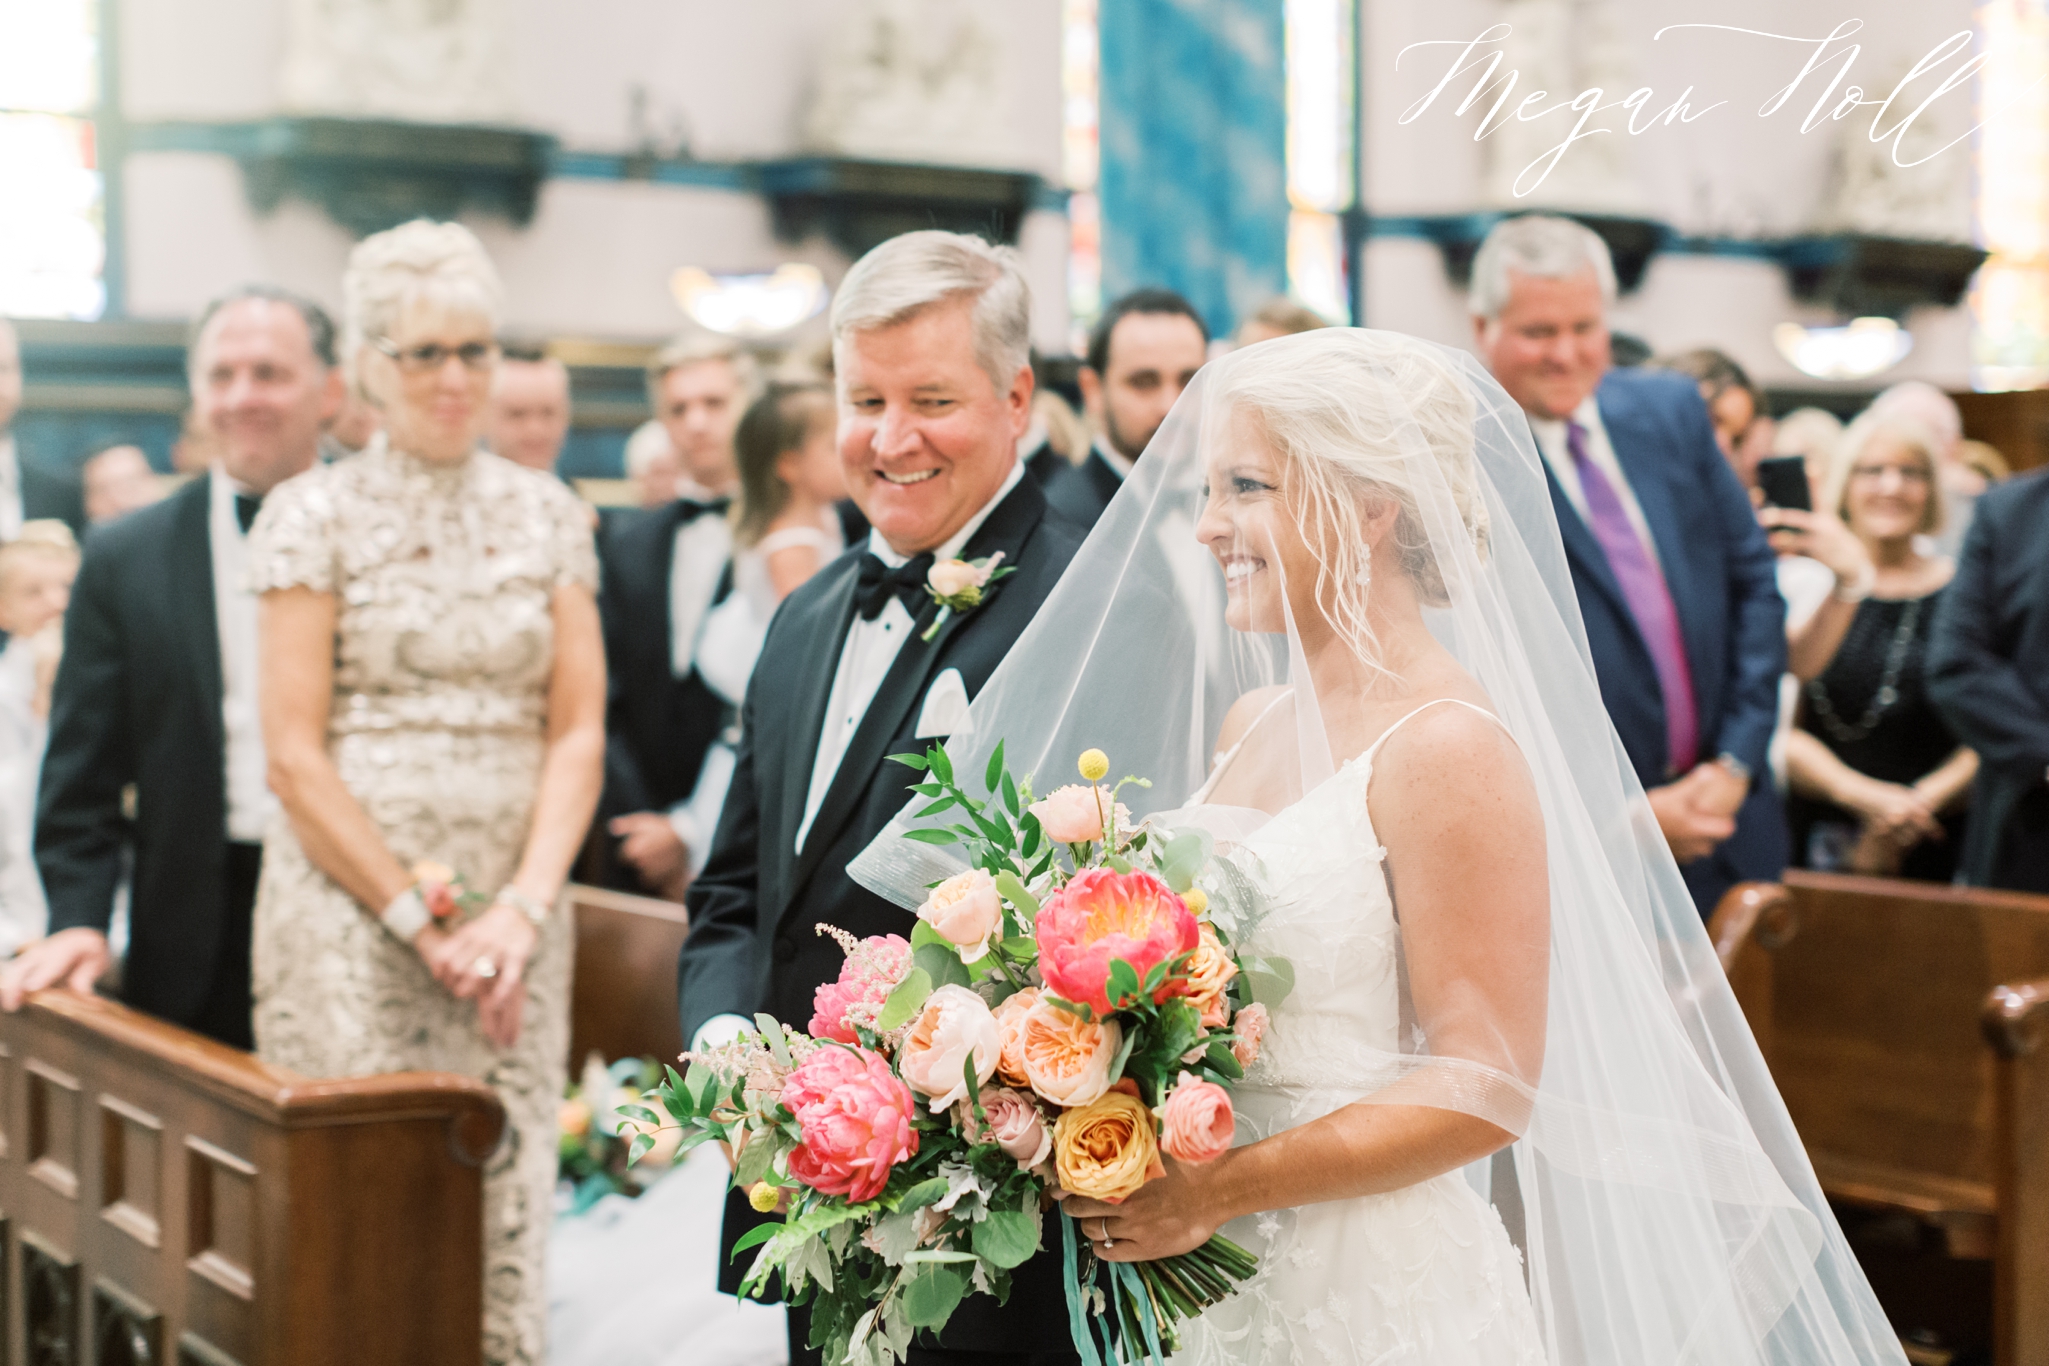 Wedding Ceremony at Saint Xavier in downtown Cincinnati as bride walks down the aisle